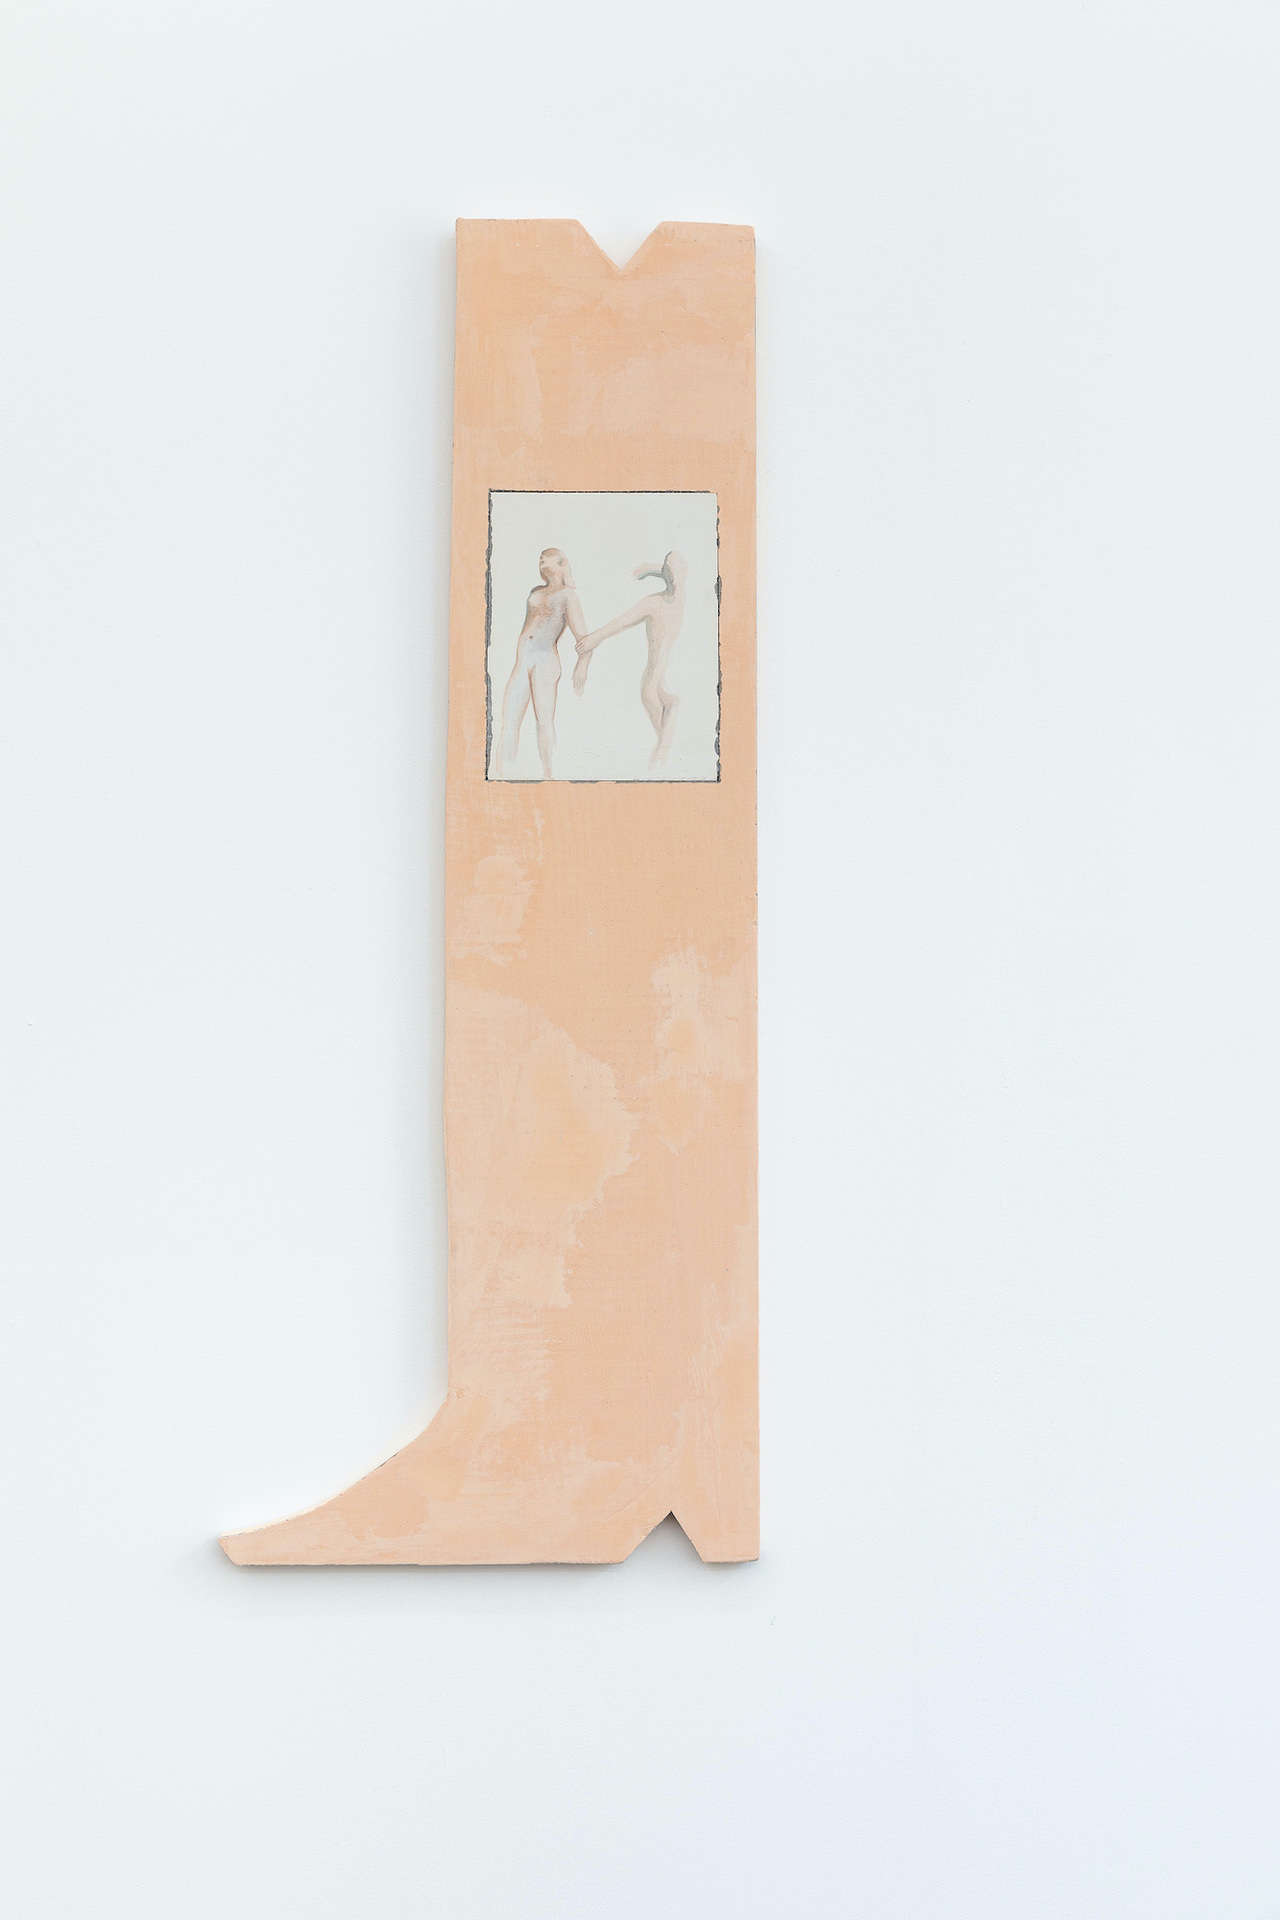 Titania Seidl & Lukas Thaler – Accidental Boot (Embedded Dance), 2021, watercolor, pigmented plaster, fibre-reinforced XPS, aluminium, 120 x 48 cm